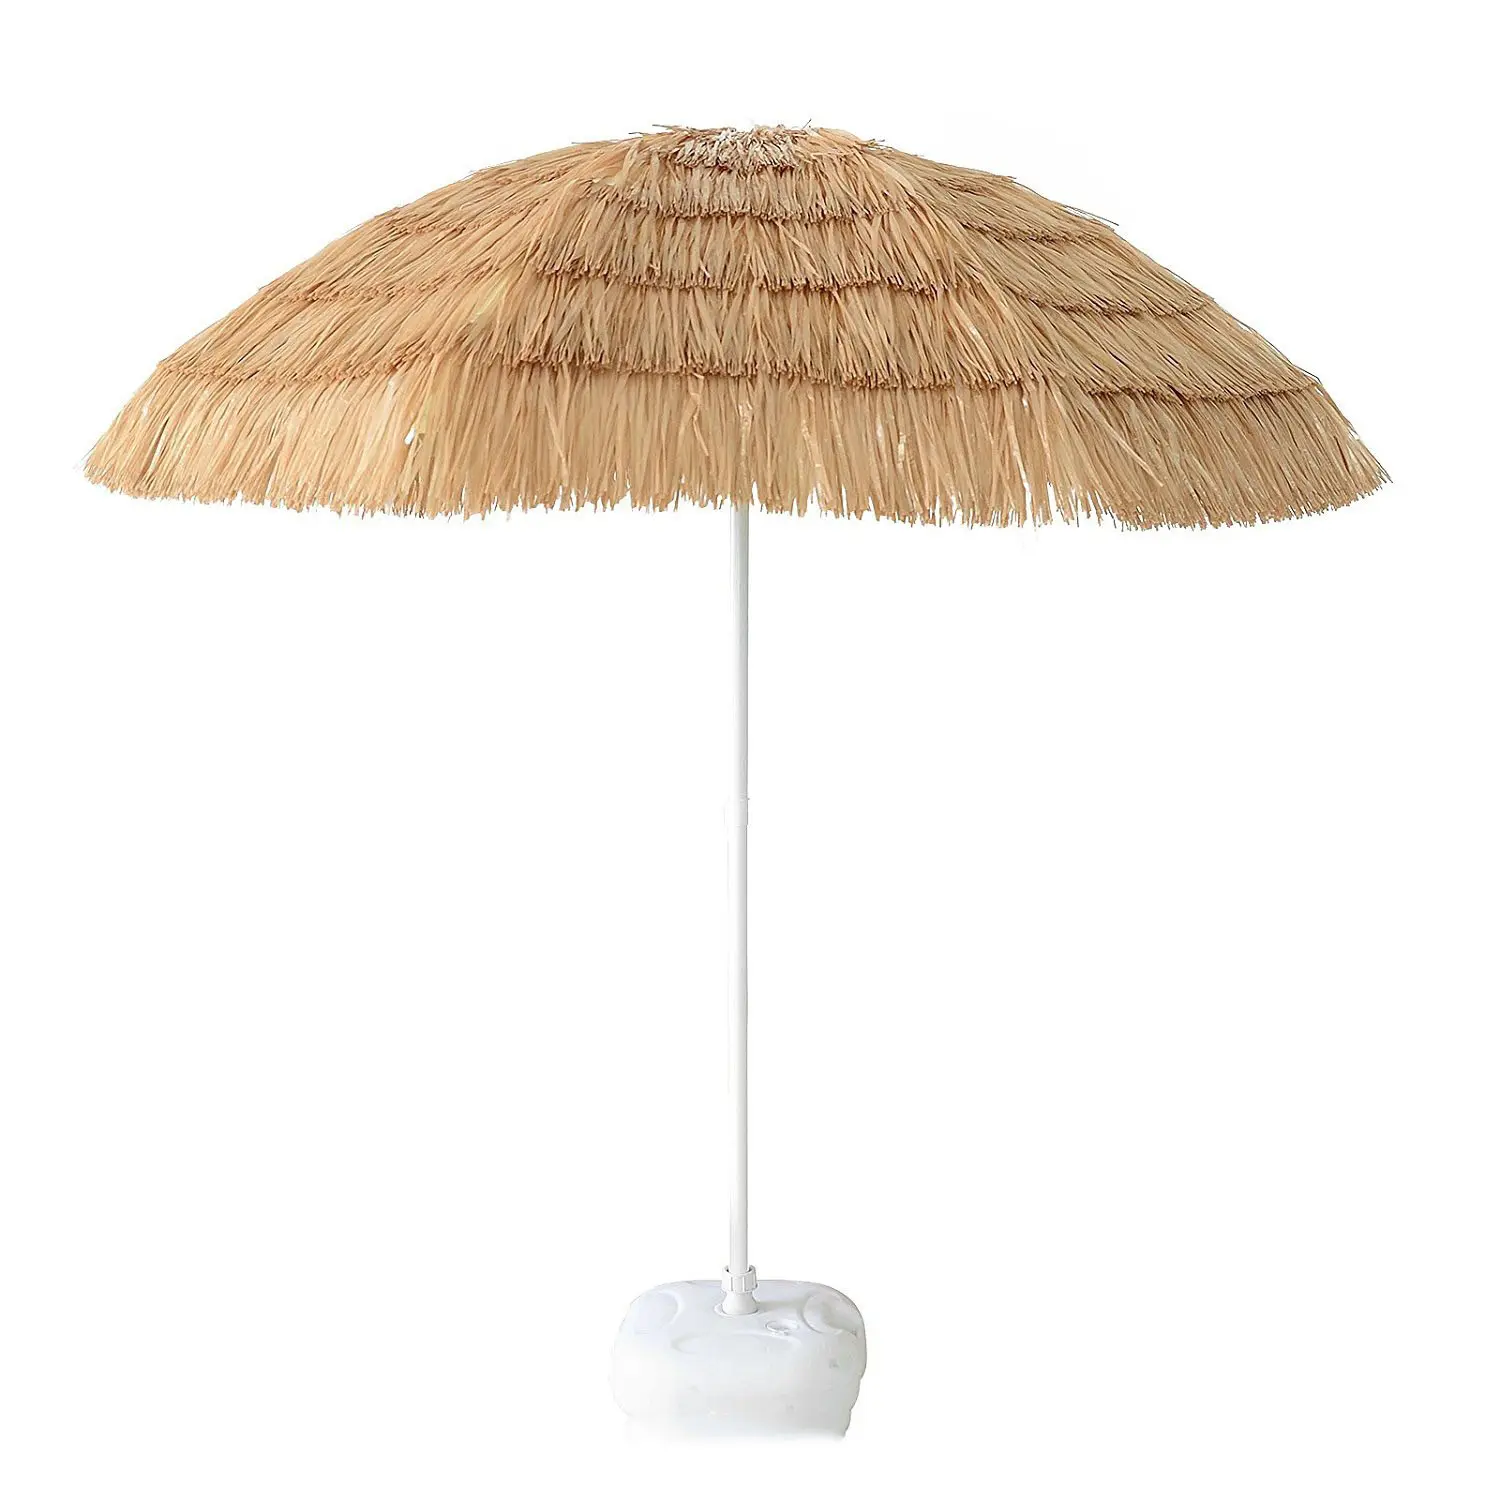 1.8m straw umbrella outdoor beach umbrella sunscreen can be customized High quality furniture umbrella